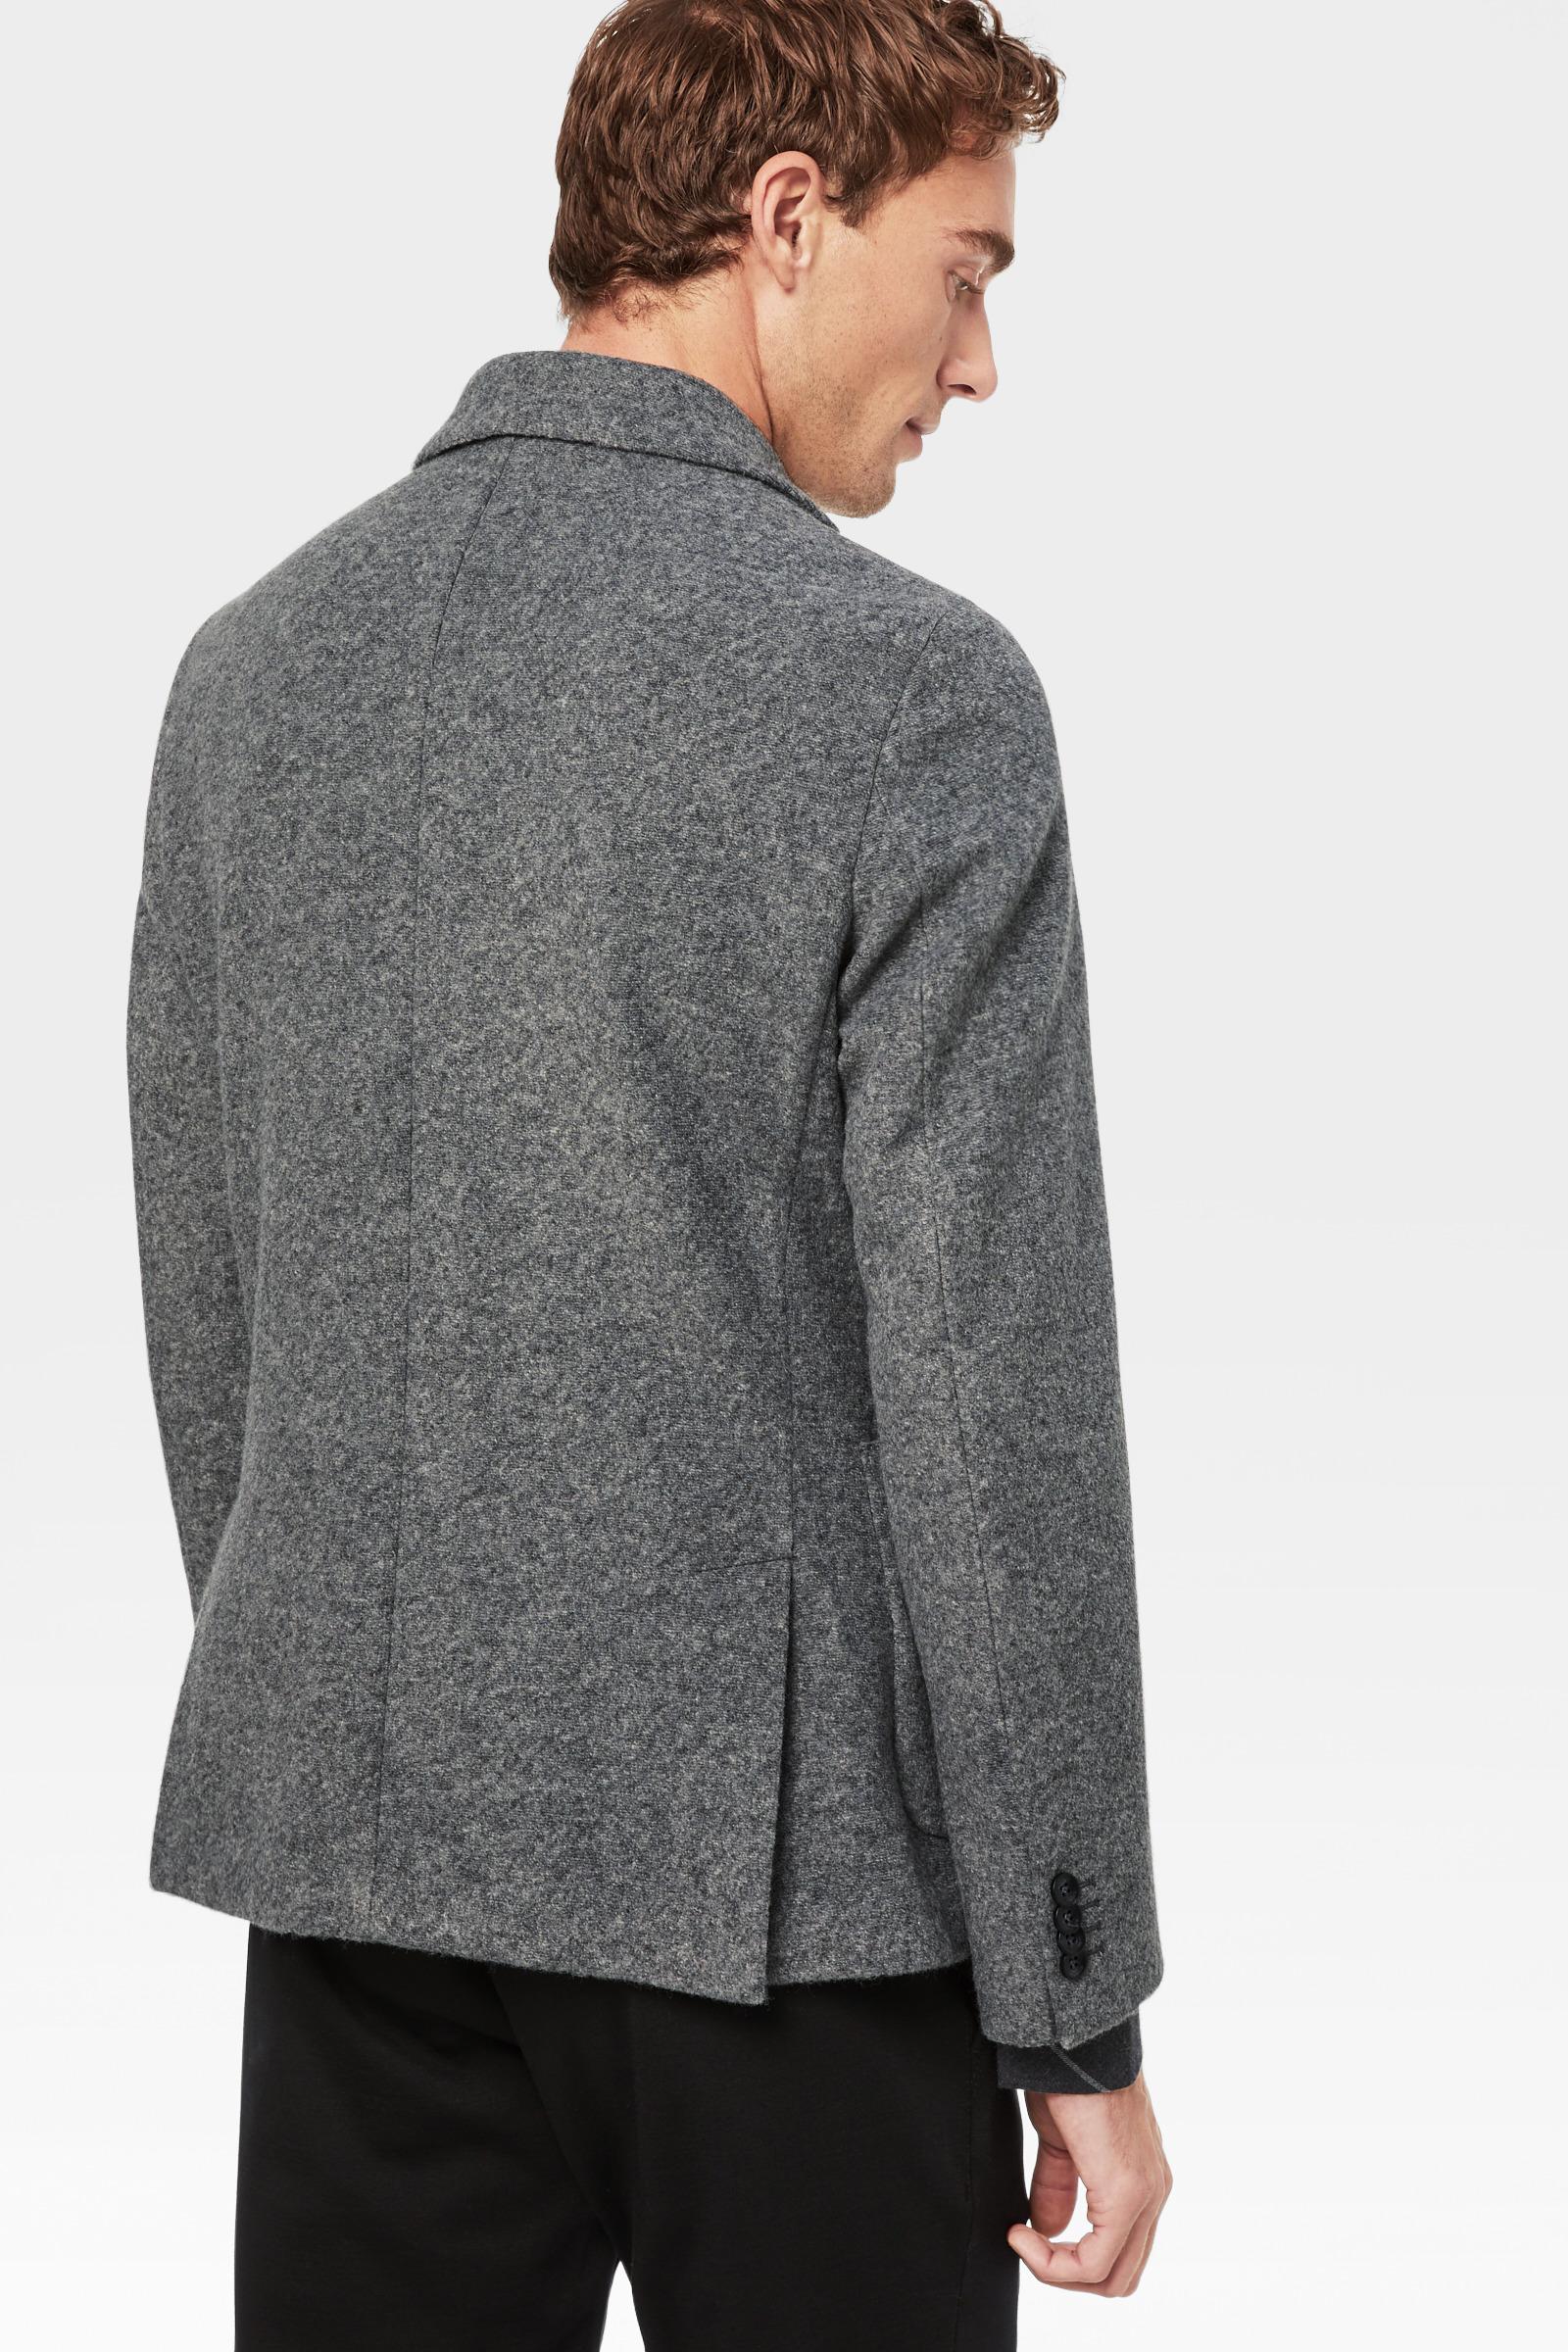 Bogner Laslo Jacket In Anthracite in Grey for Men | Lyst Canada